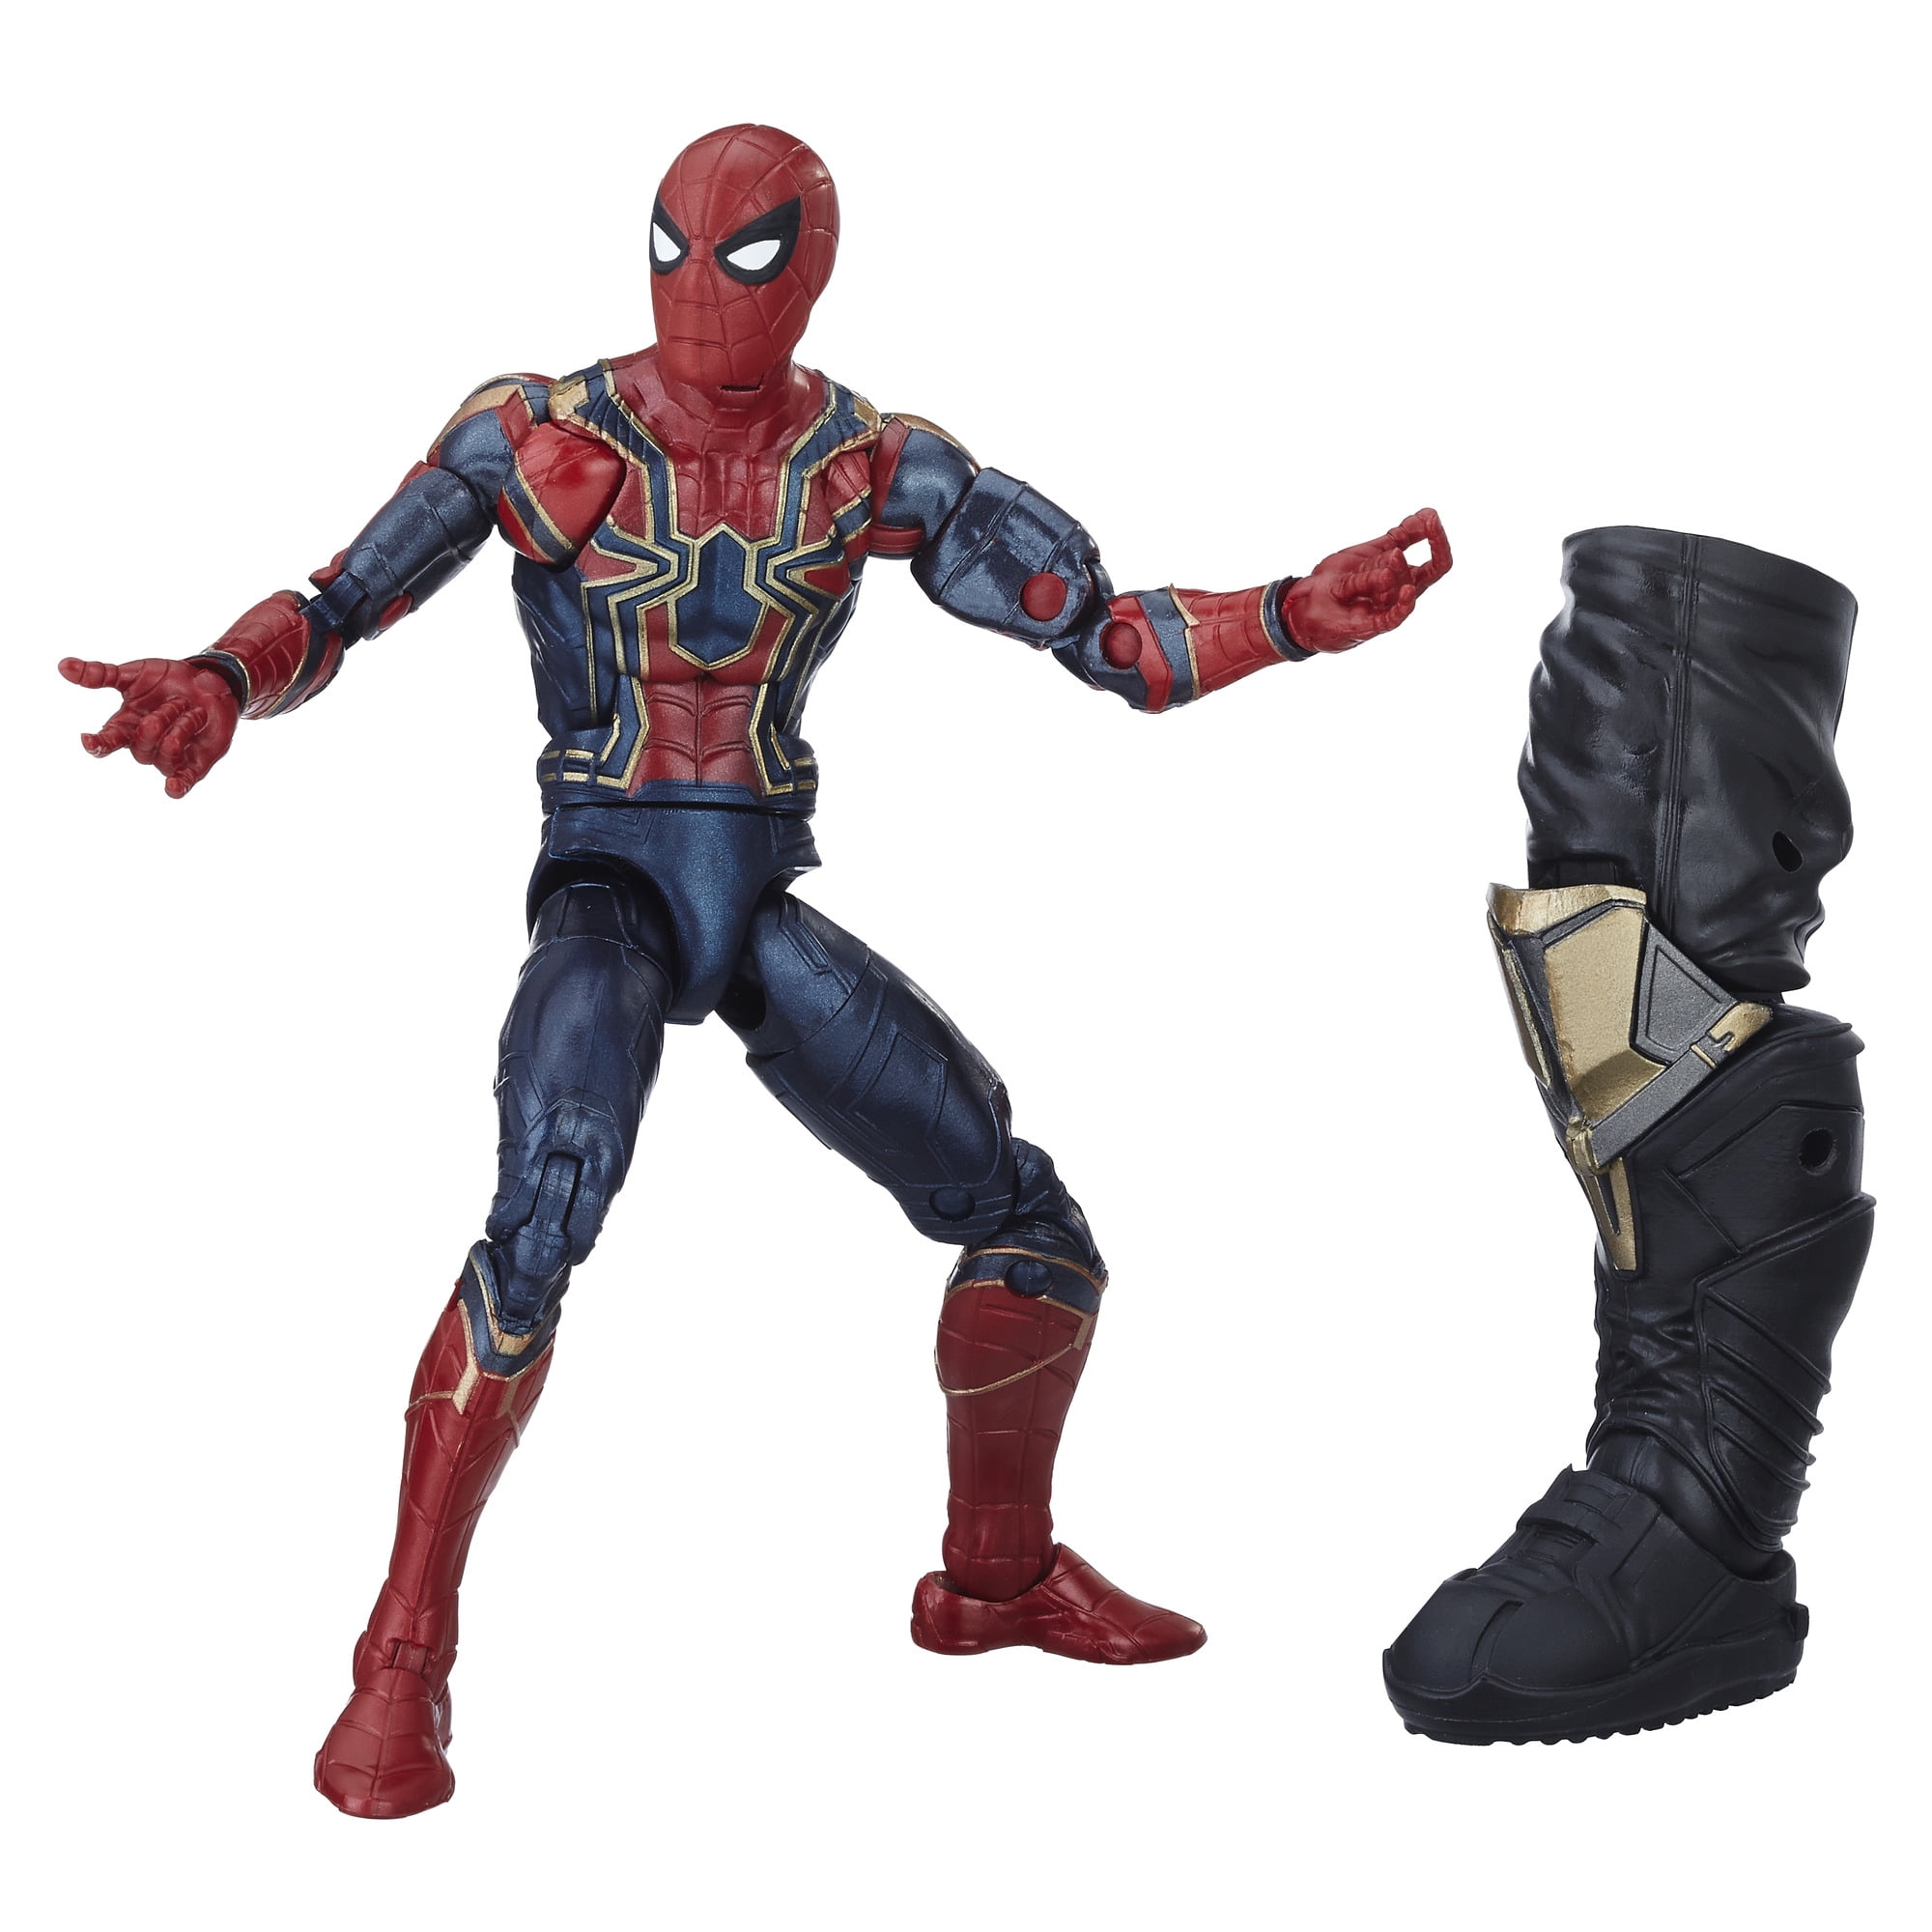 Details about   Spiderman Series Spider-Man PVC Action Figure Marvel Legends Avengers Toy 18cm